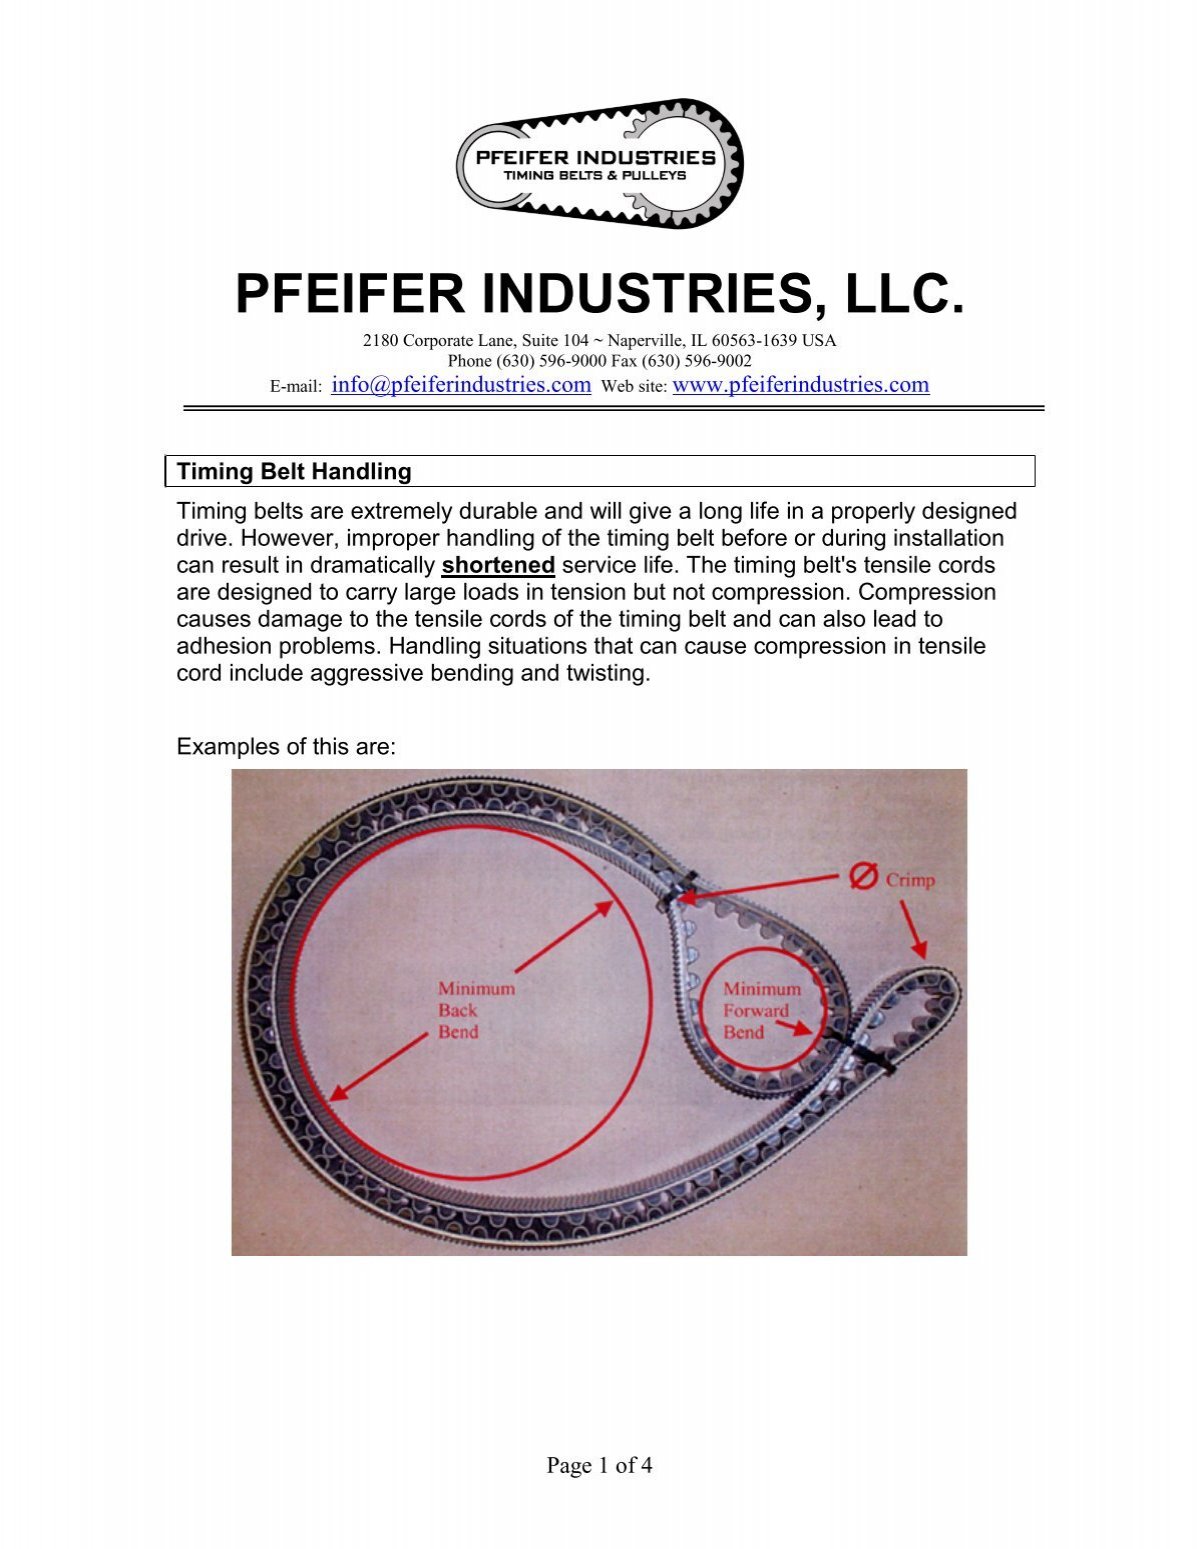 downloadable-printable-timing-belt-handling-pfeifer-industries